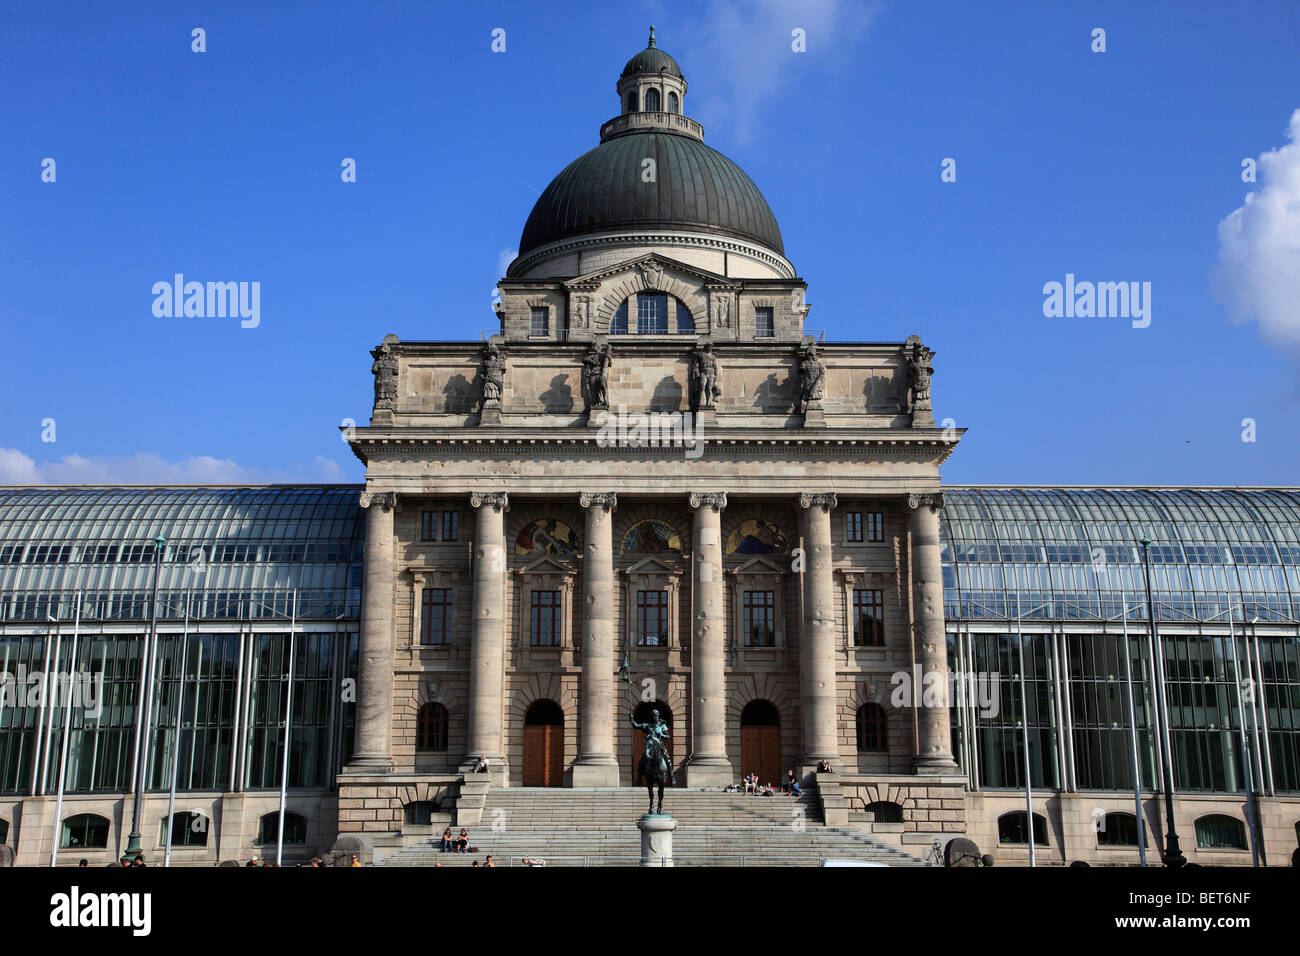 Germany, Bavaria, Munich, Bavarian State Government Building Stock Photo